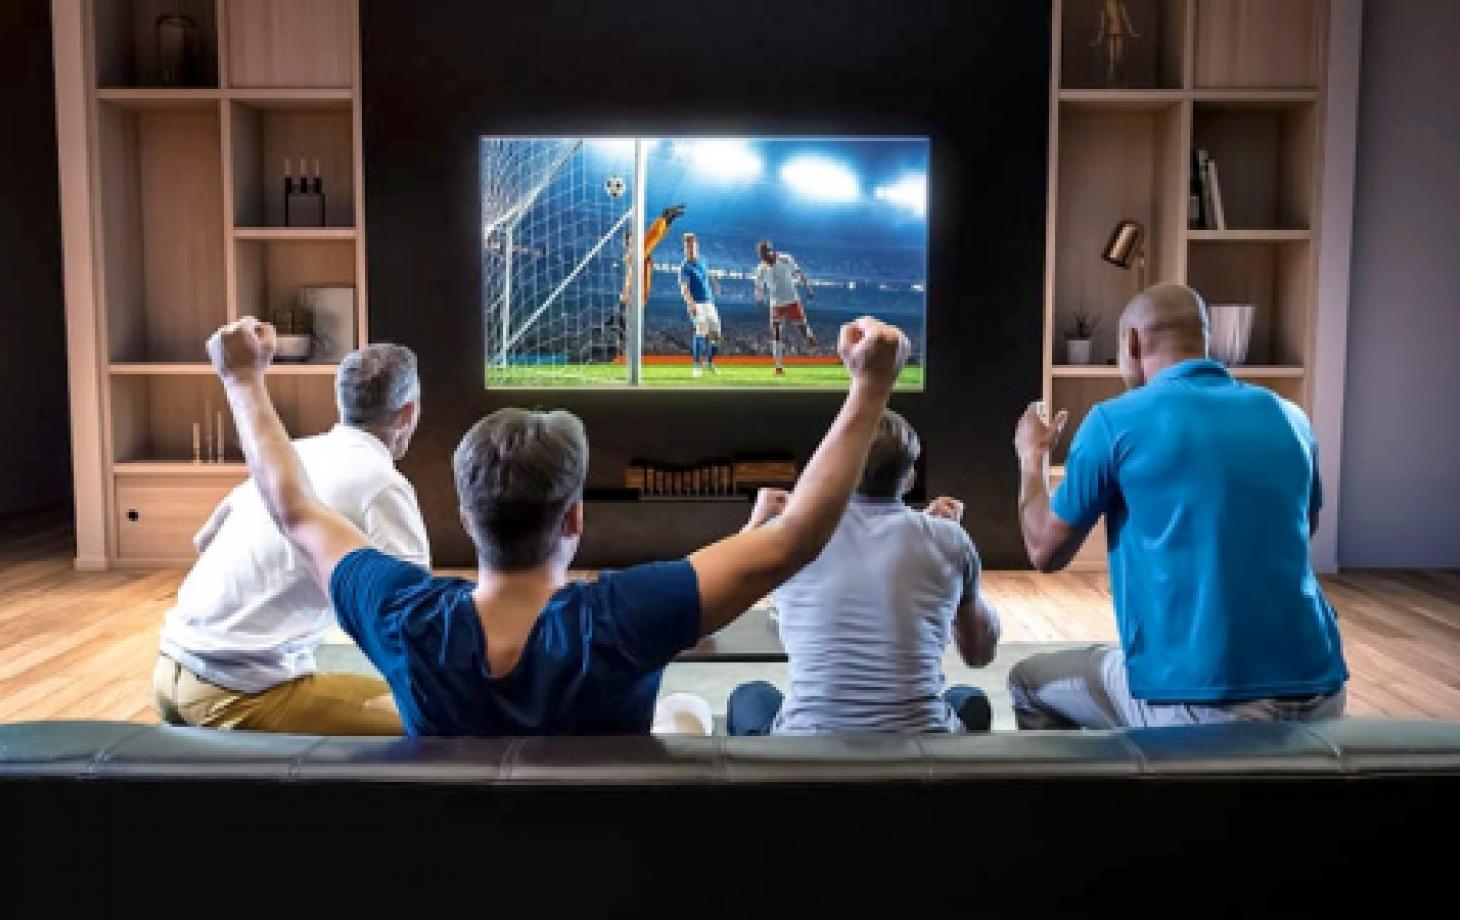 Back tv. Спортивный телевизор. Футбол по телевизору. Человек перед телевизором. Телевизор футбол.